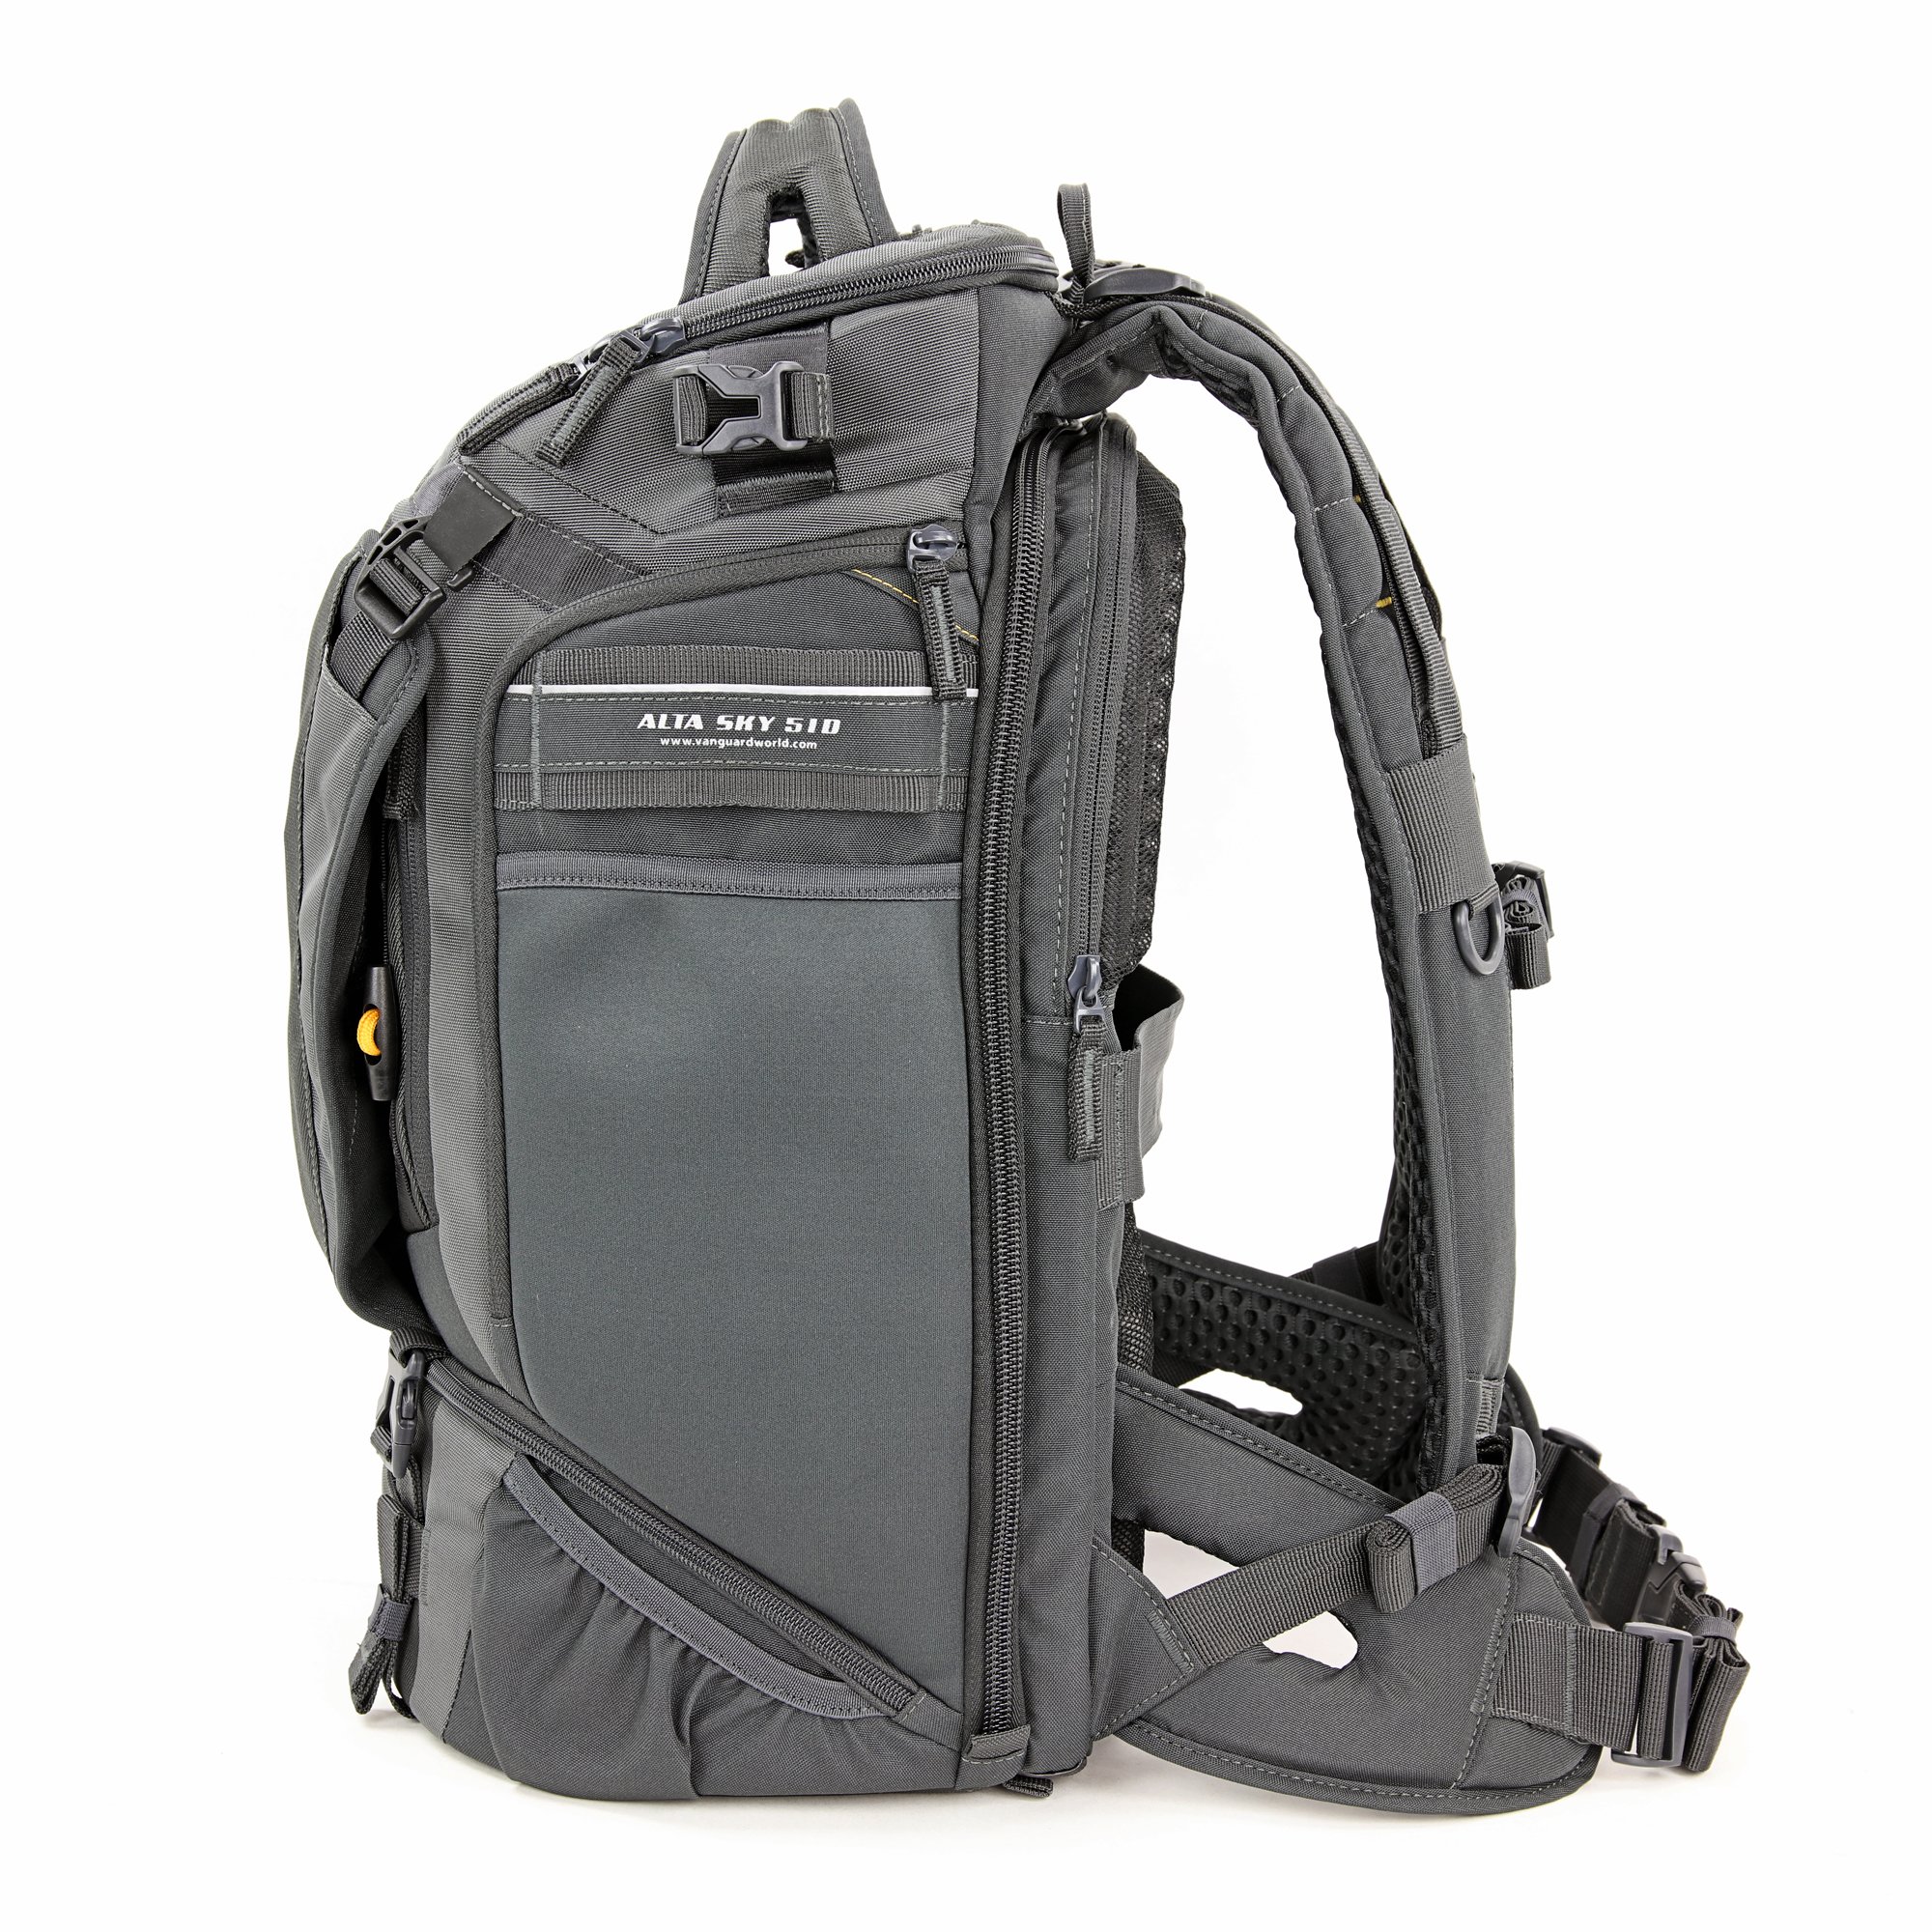 VANGUARD Alta Sky 51D Camera Backpack for Sony, Nikon, Canon, DSLR, Drones, Grey, AltaSky51D